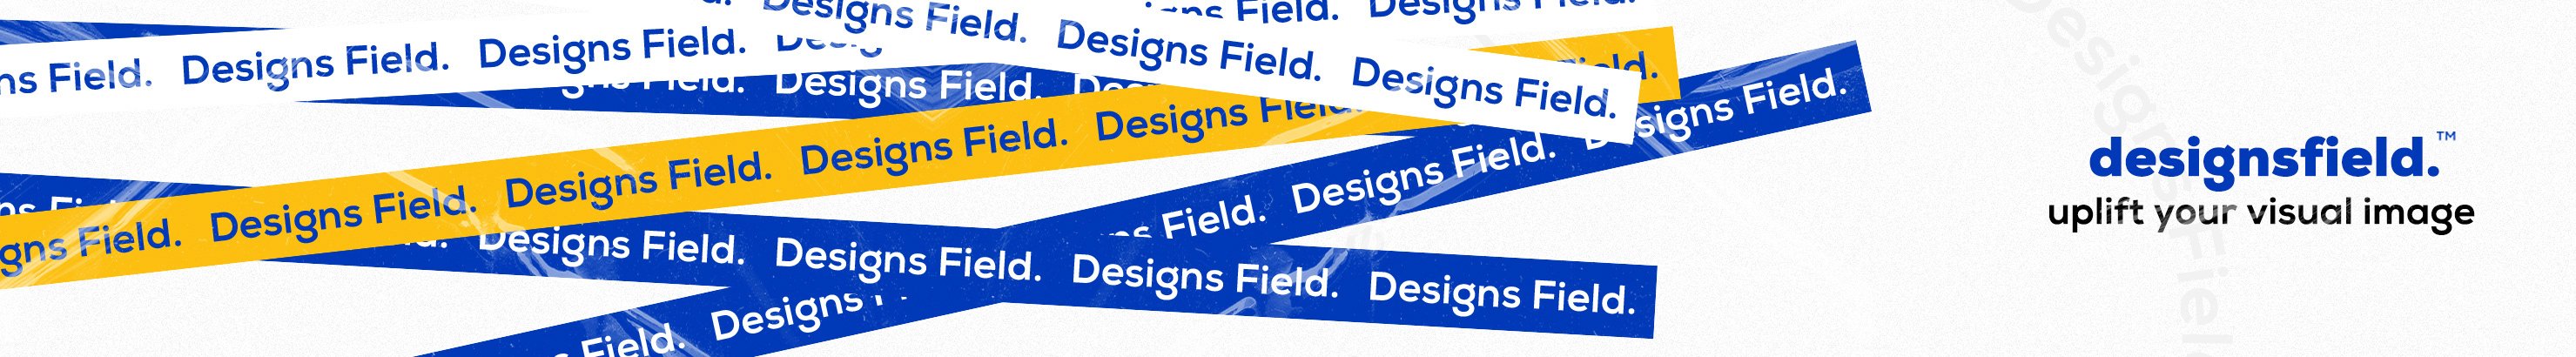 Designs Field Agency's profile banner